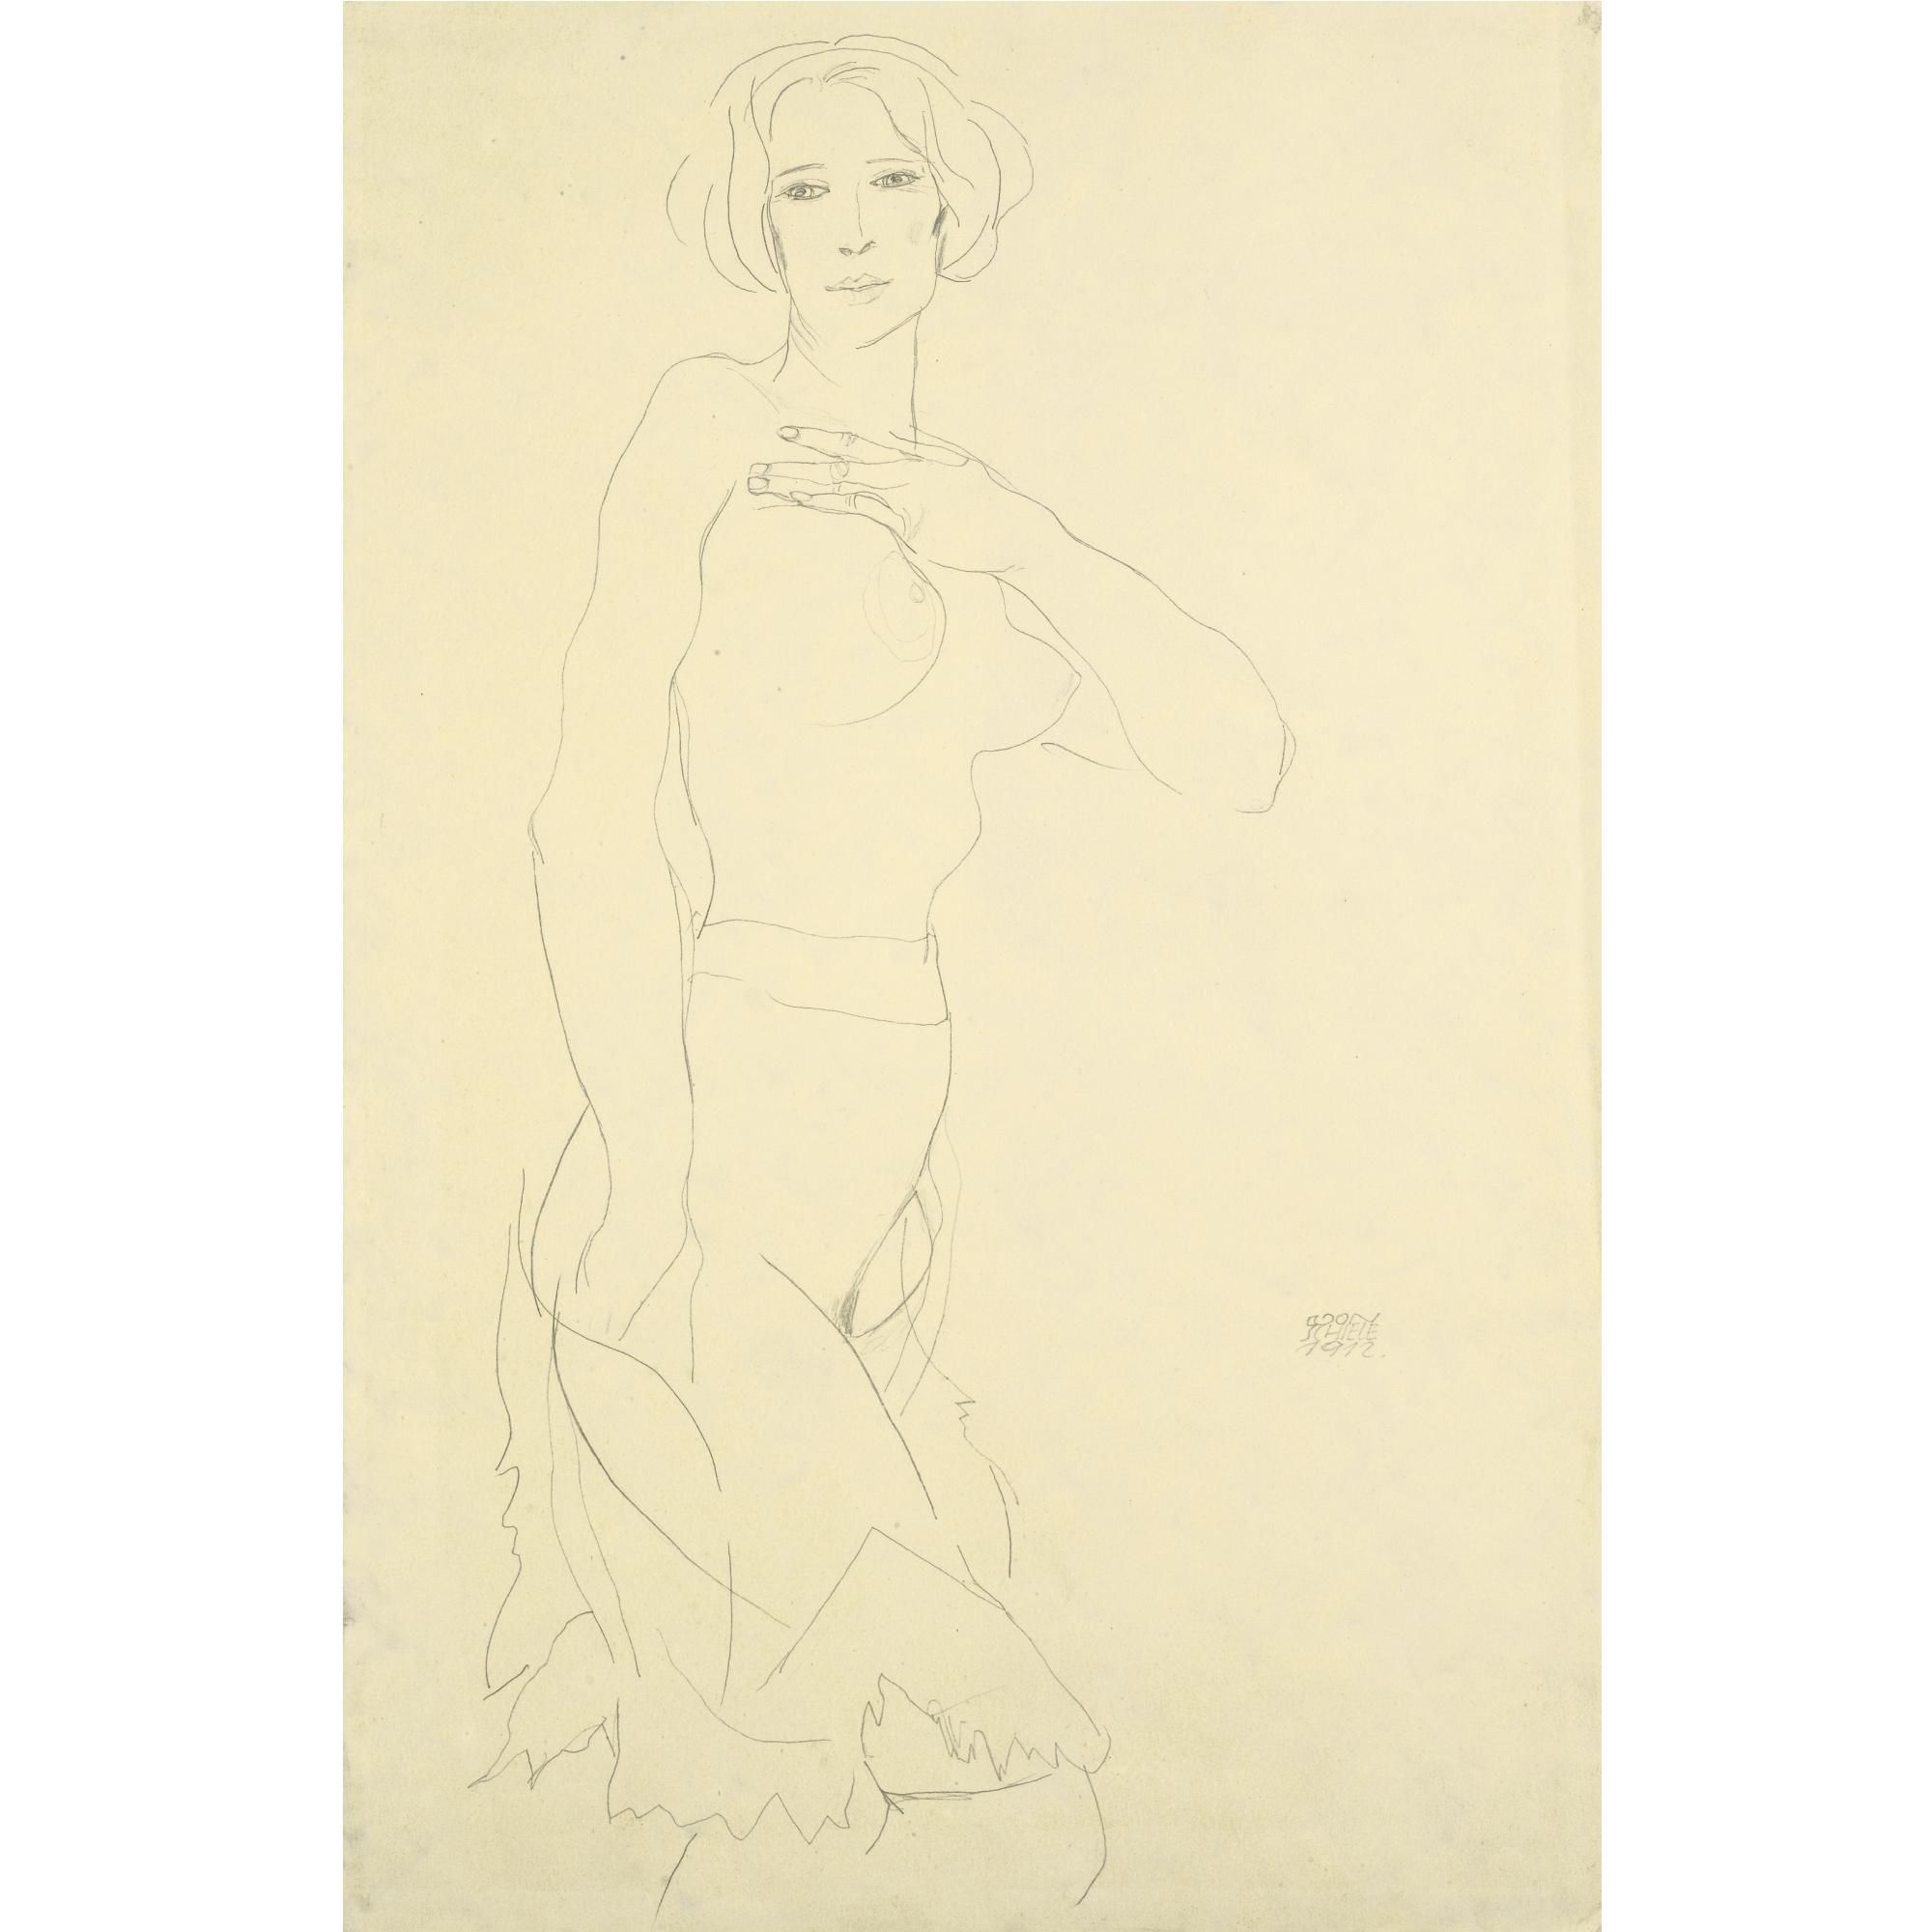 MÄDCHENAKT (FEMALE NUDE) by Egon Schiele, FullFormat:,year,1912